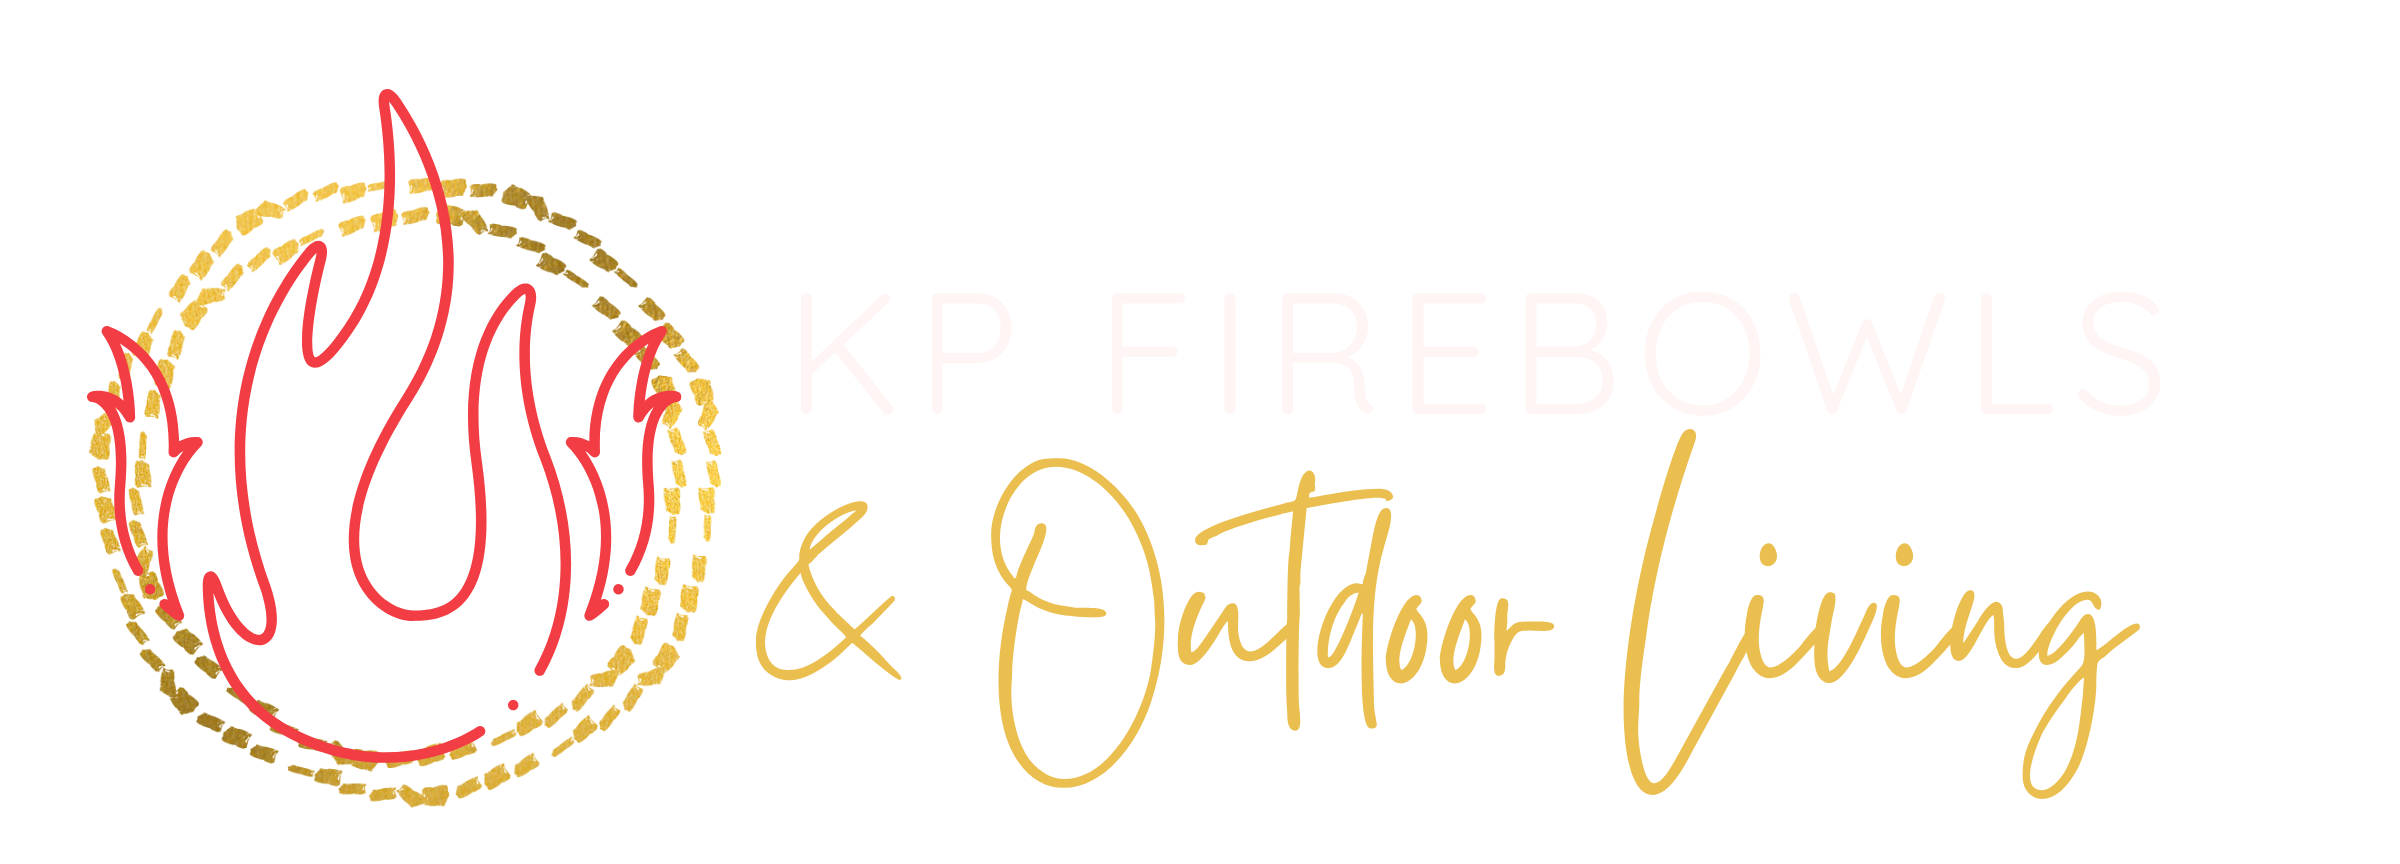 KP FireBowls & Coastal Living